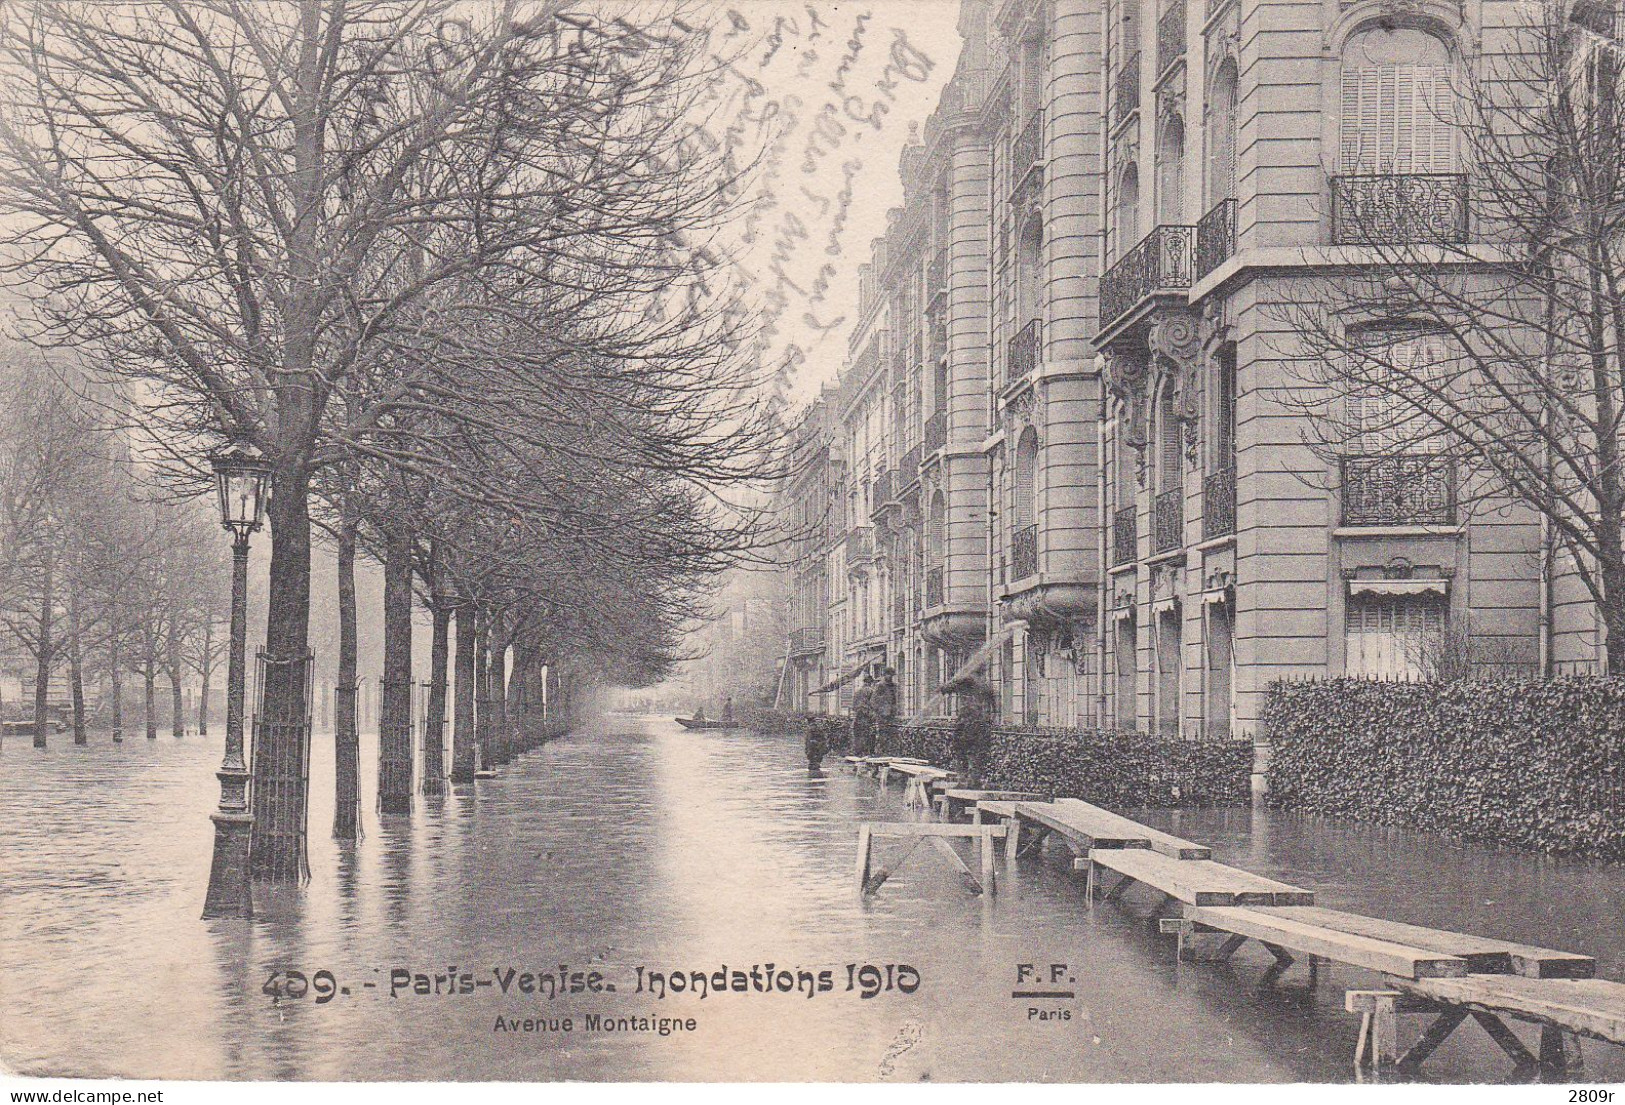 11 cartes inondations de paris